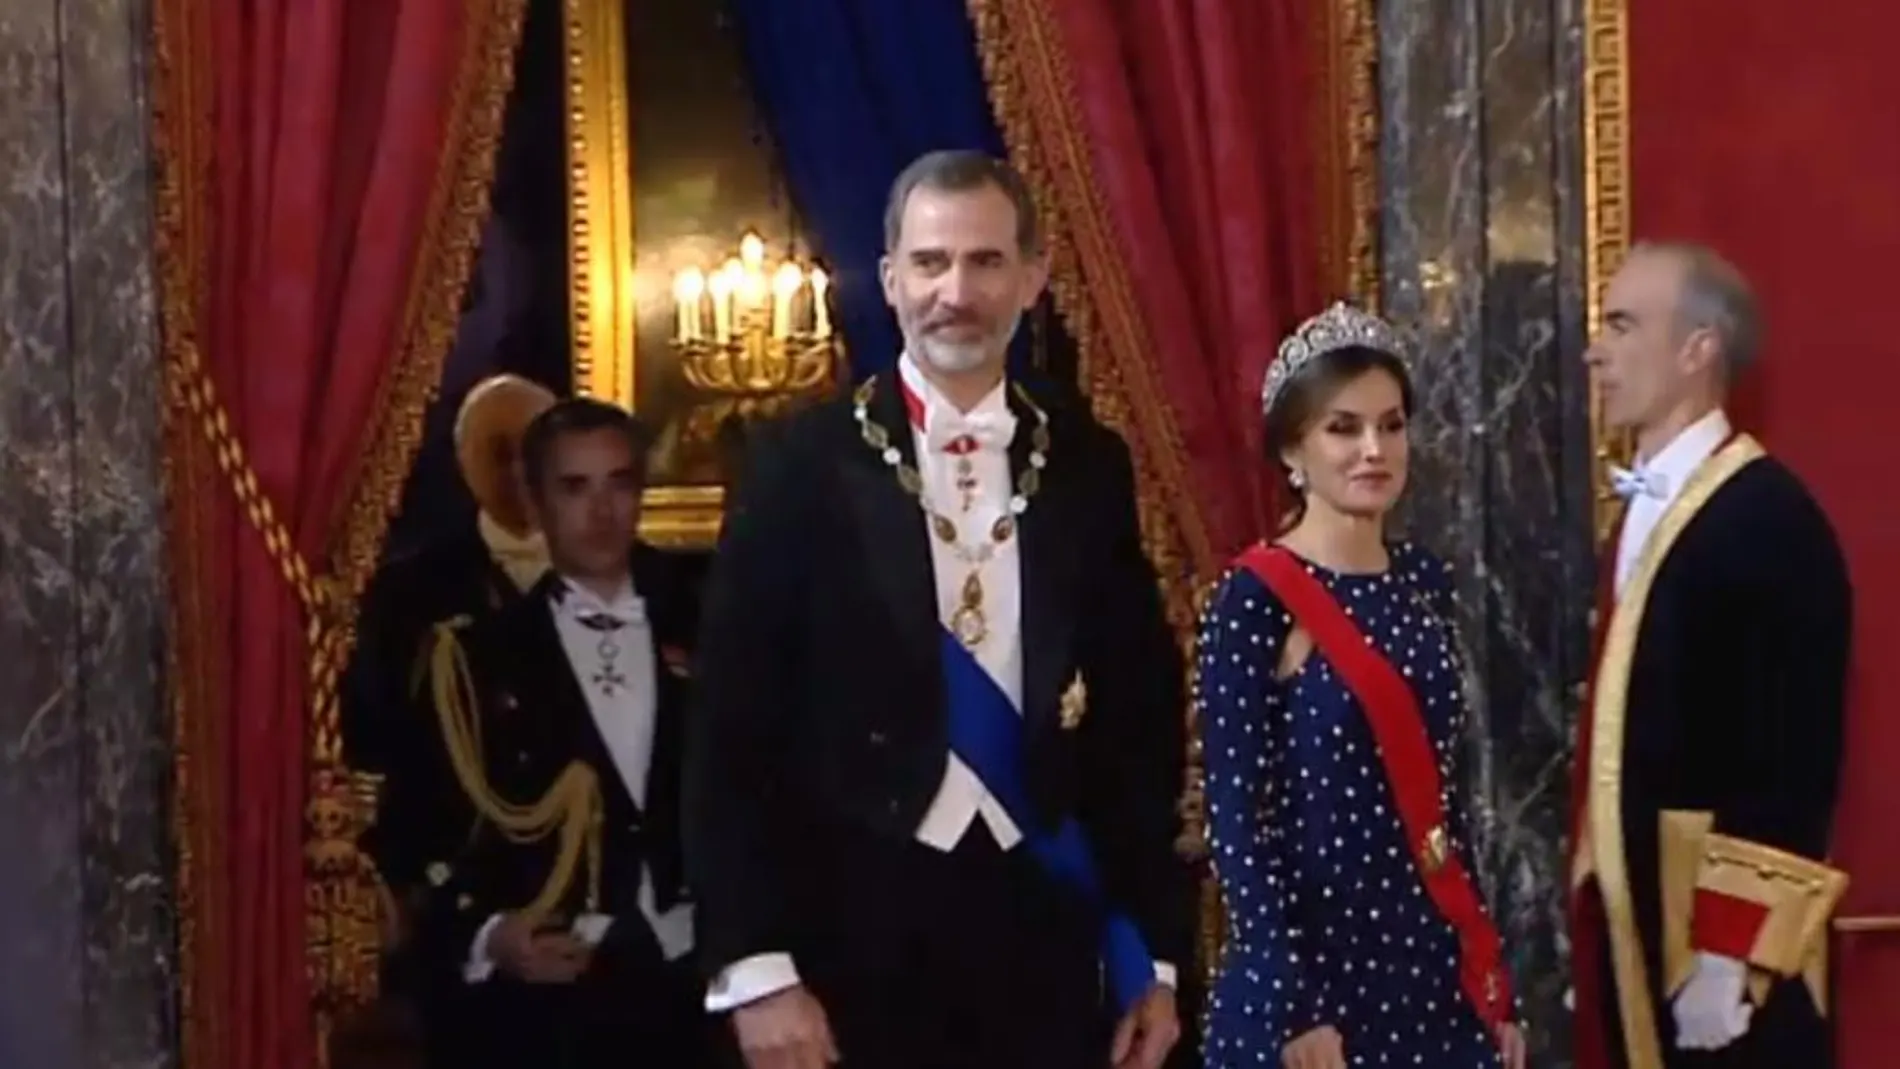 Doña Letizia posa con la tiara favorita de la reina emérita Doña Sofía